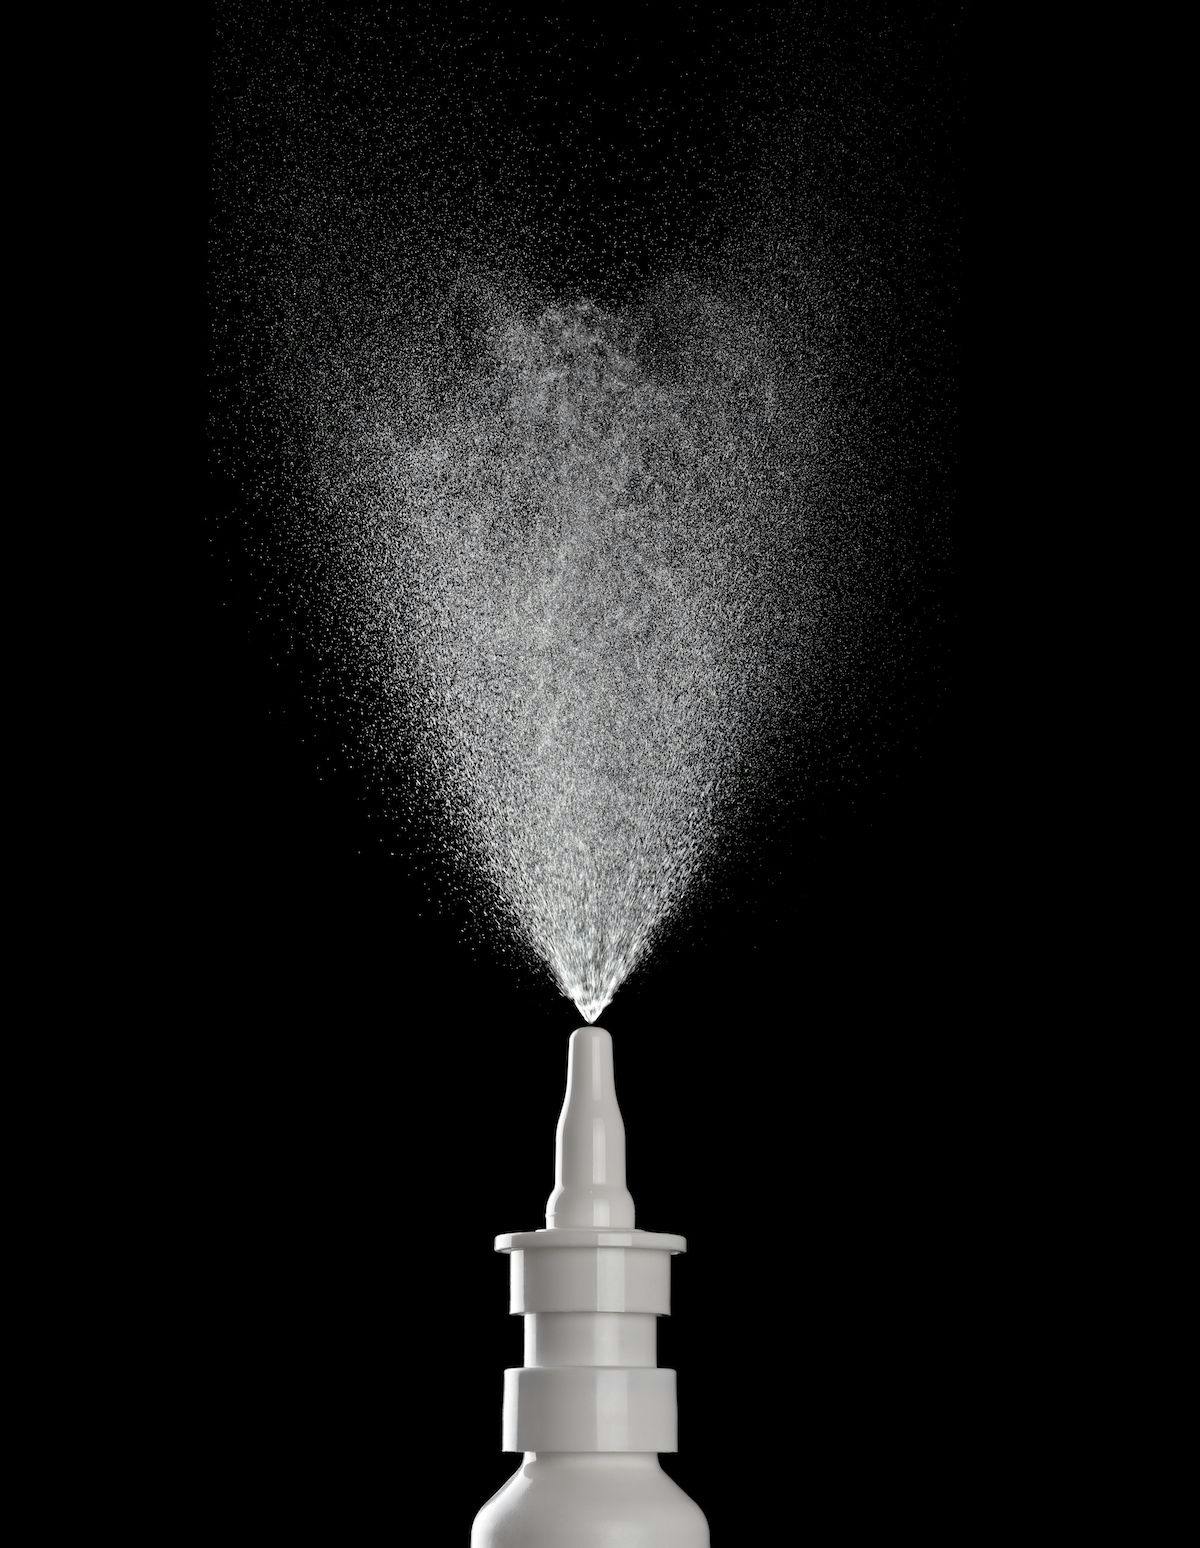 spray bottle liquid perfume drop | ©Lumos sp | Adobe Stock